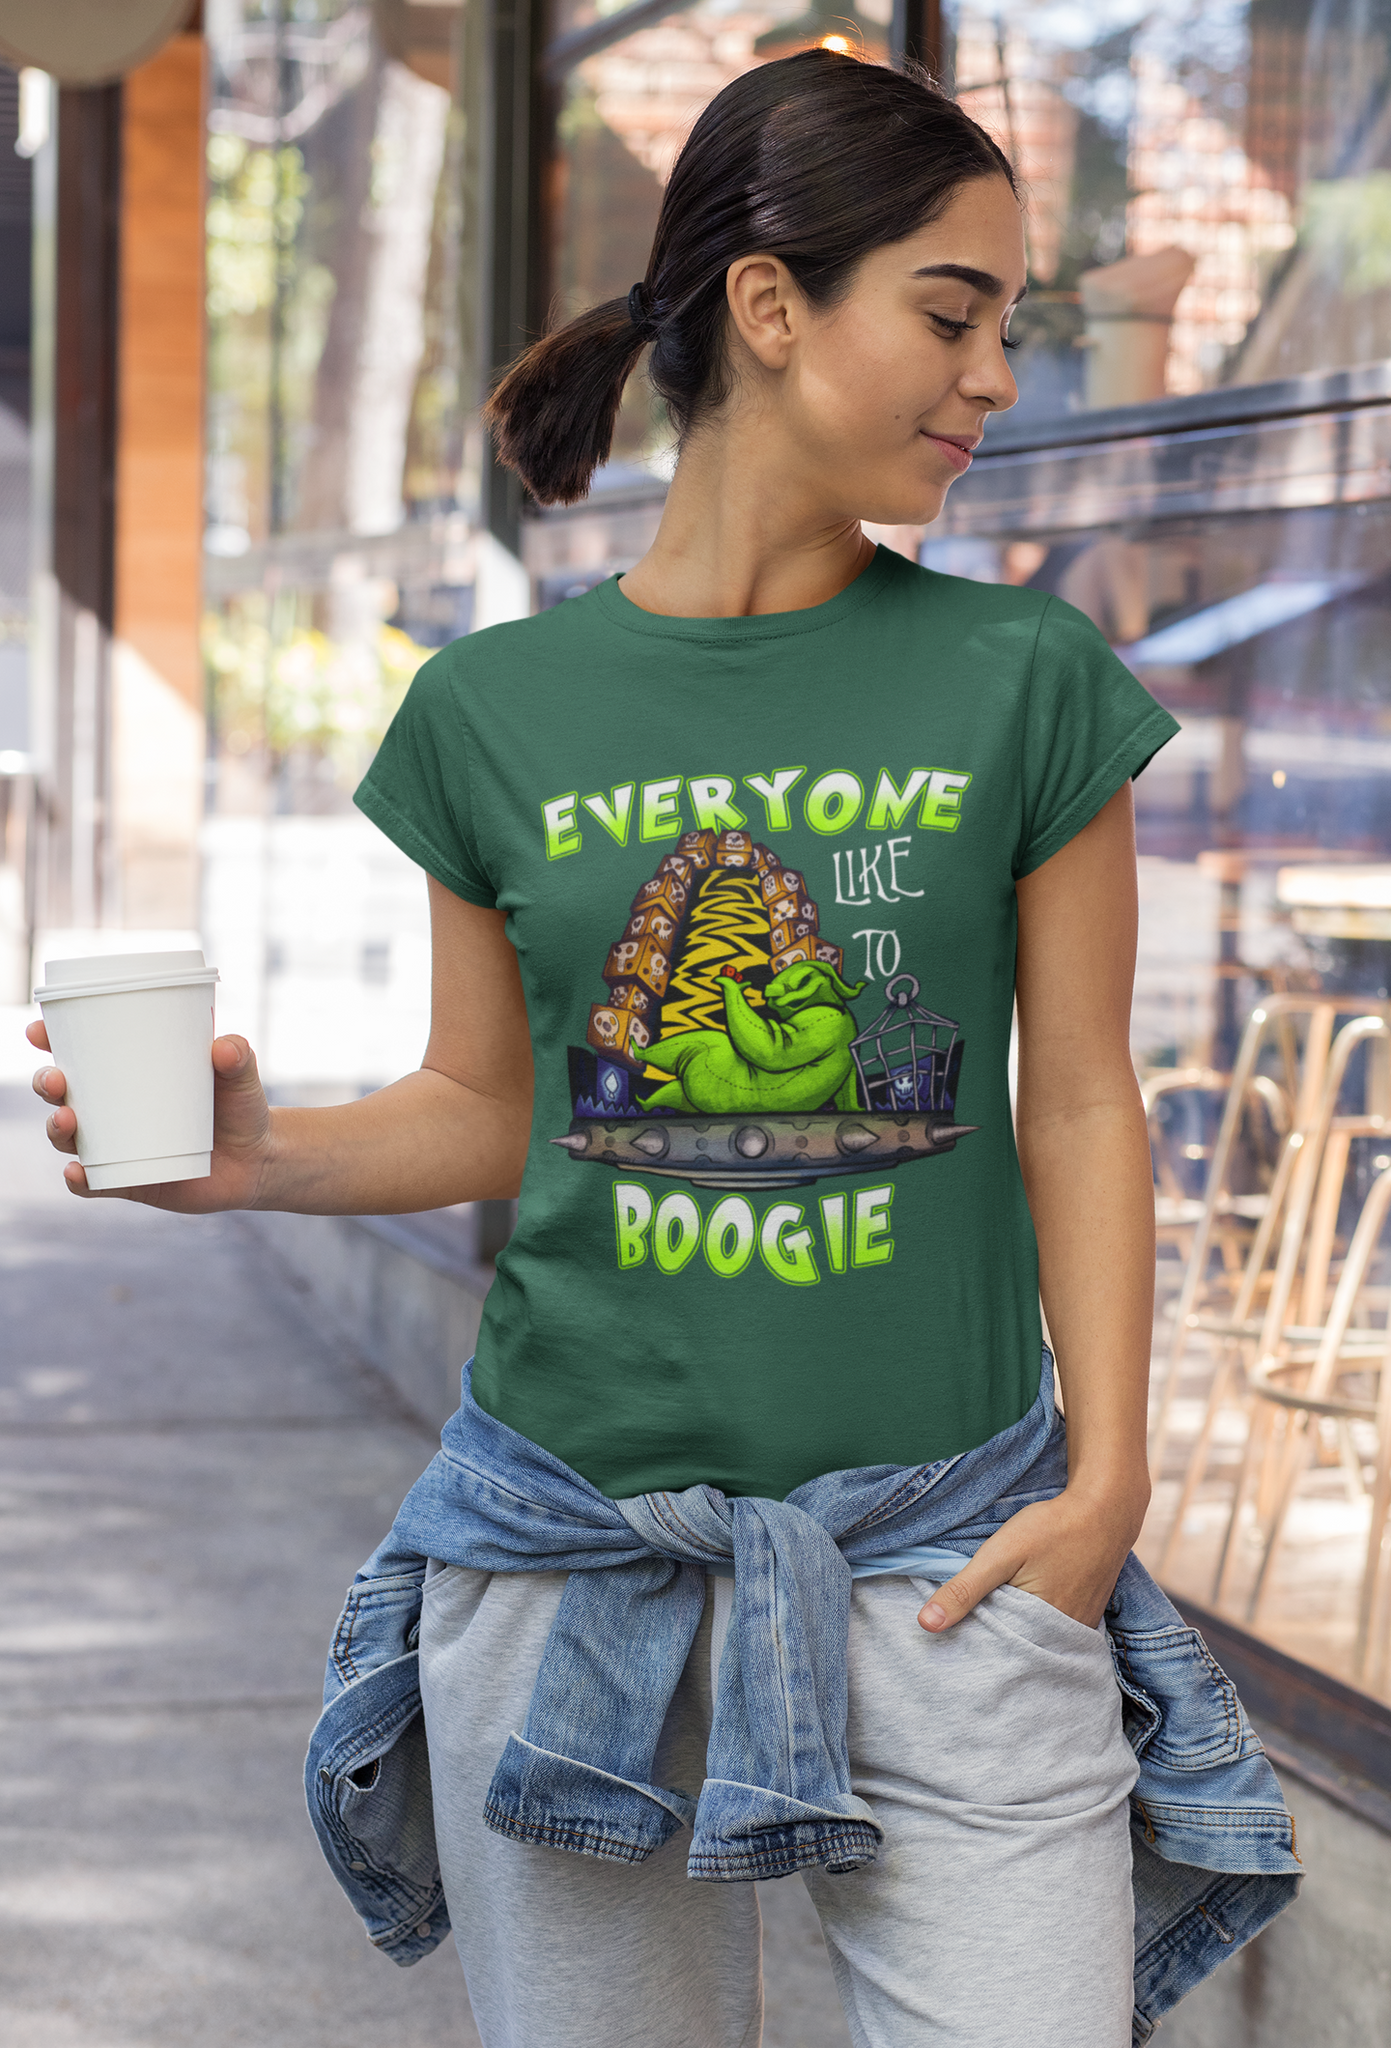 Nightmare Before Christmas T Shirt, Everyone Like To Boogie Tshirt, Oogie Boogie T Shirt, Halloween Gifts